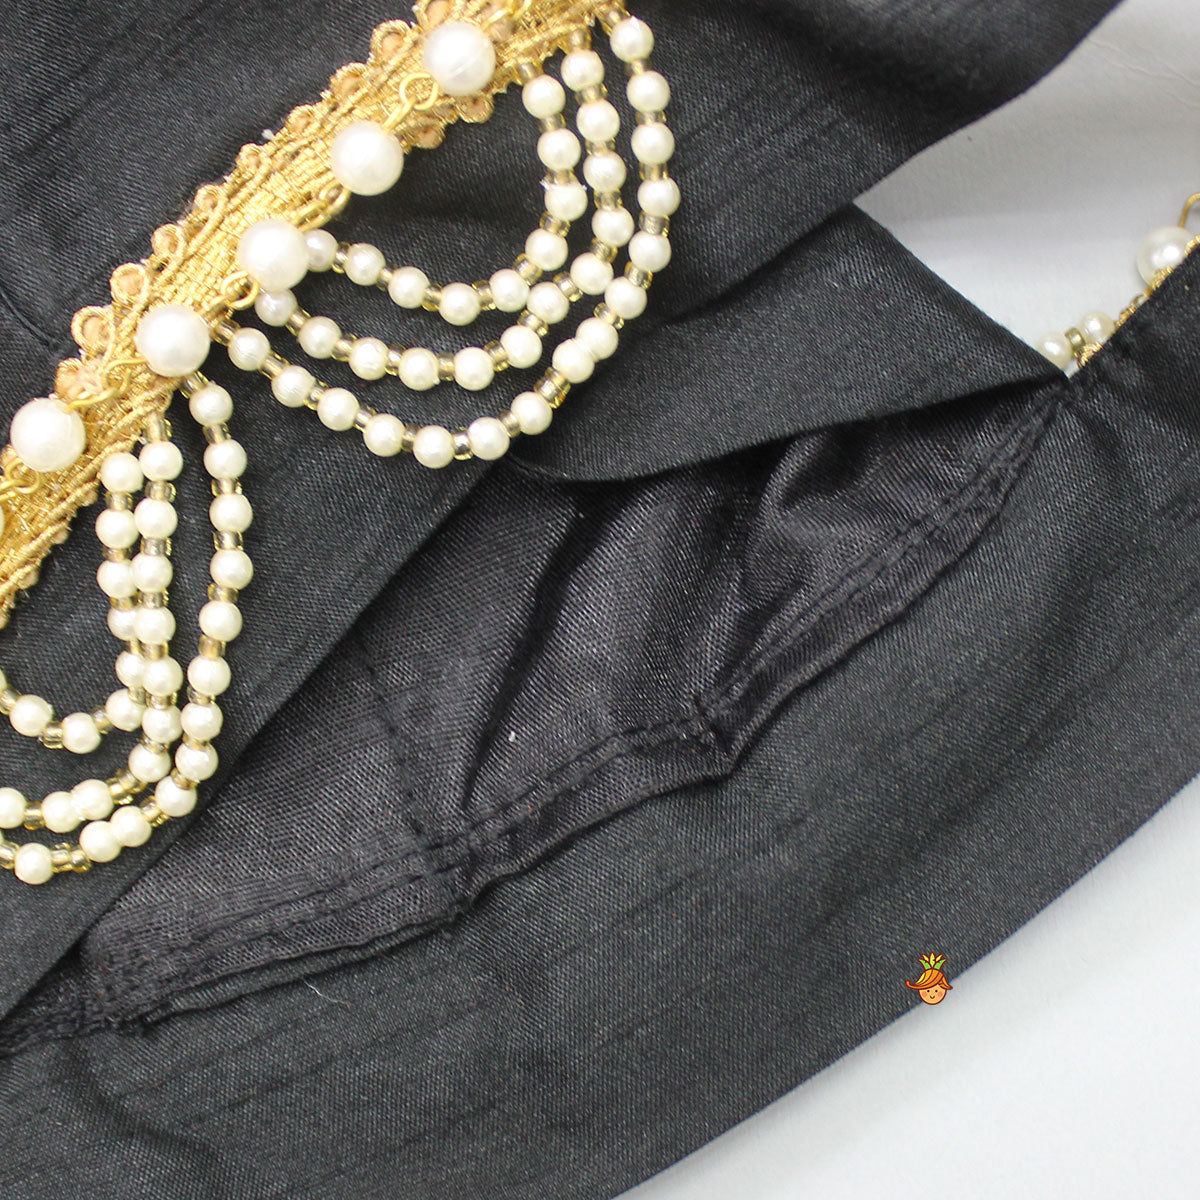 Open Back Elegant Stone Studded Black Top And Brocade Lehenga With Shimmery Fringes Dupatta And Potli Bag